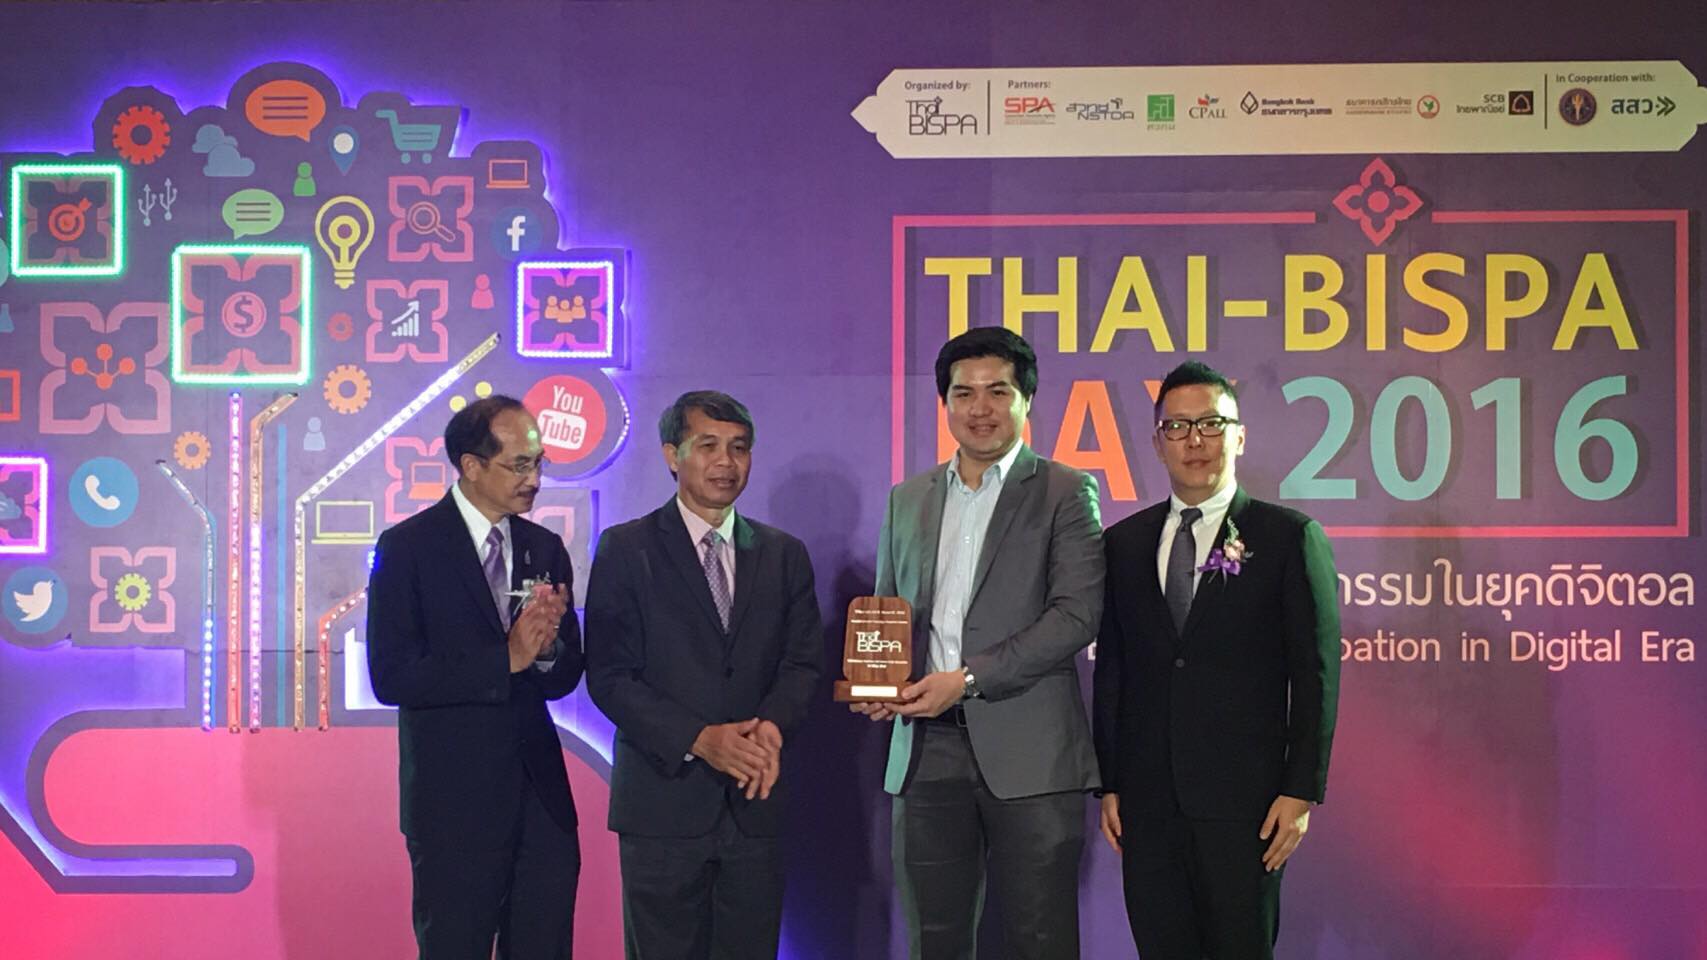 SUT Global โรงจัดการขยะครบวงจร ยังได้รางวัล Thai-BISPA Awards 2016